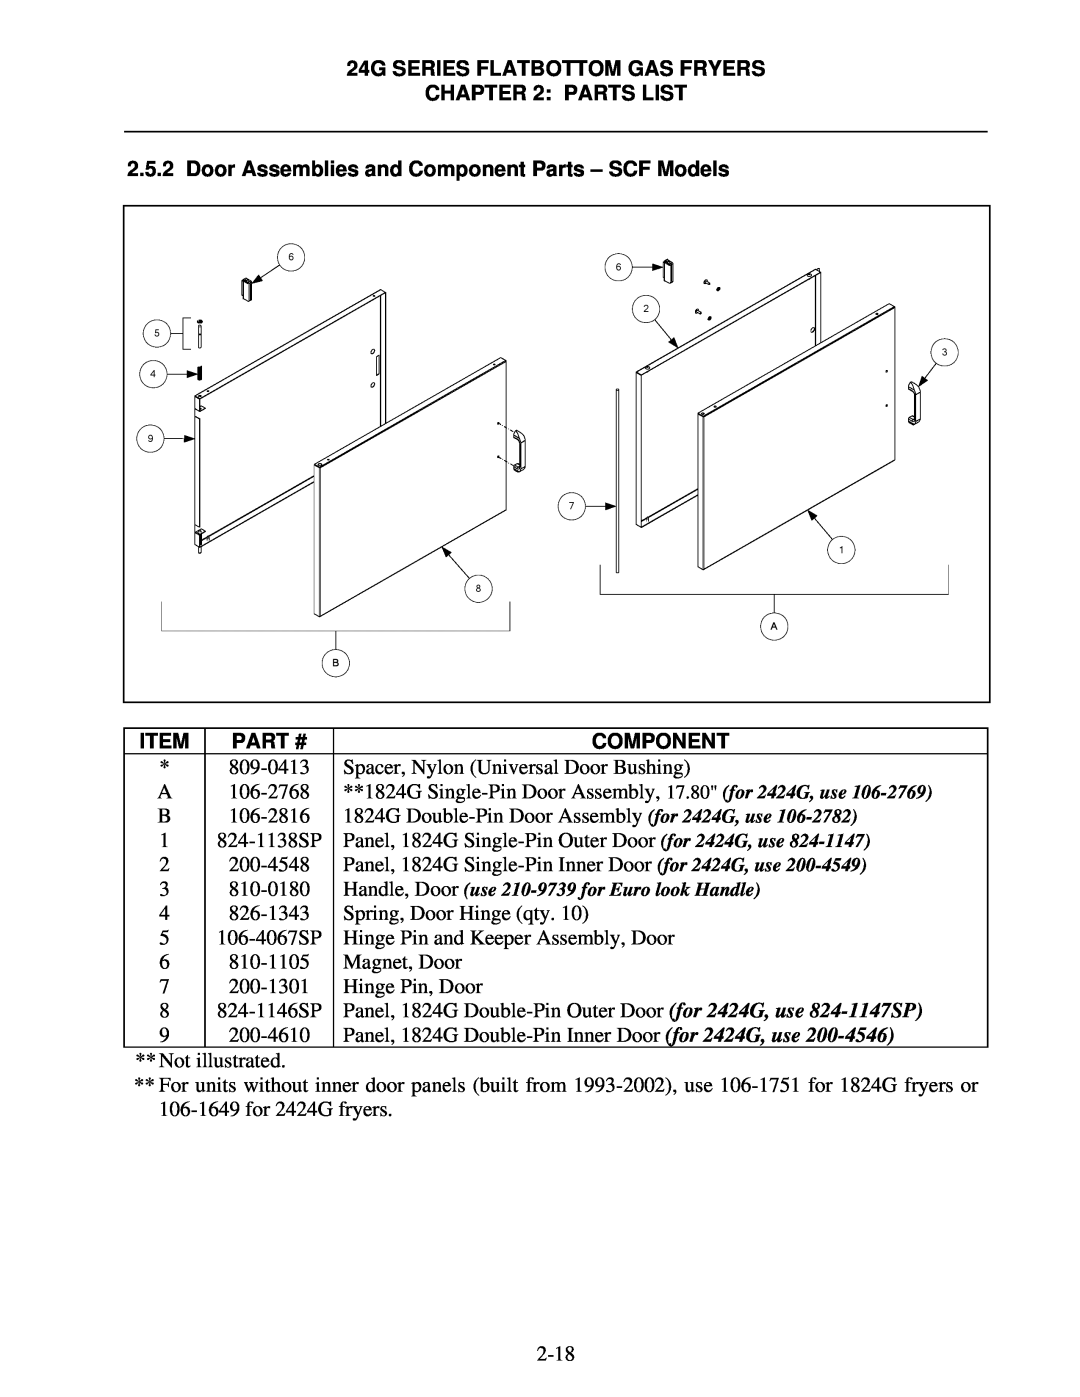 Frymaster 1824/2424G manual Door Assemblies and Component Parts - SCF Models, 24G SERIES FLATBOTTOM GAS FRYERS PARTS LIST 